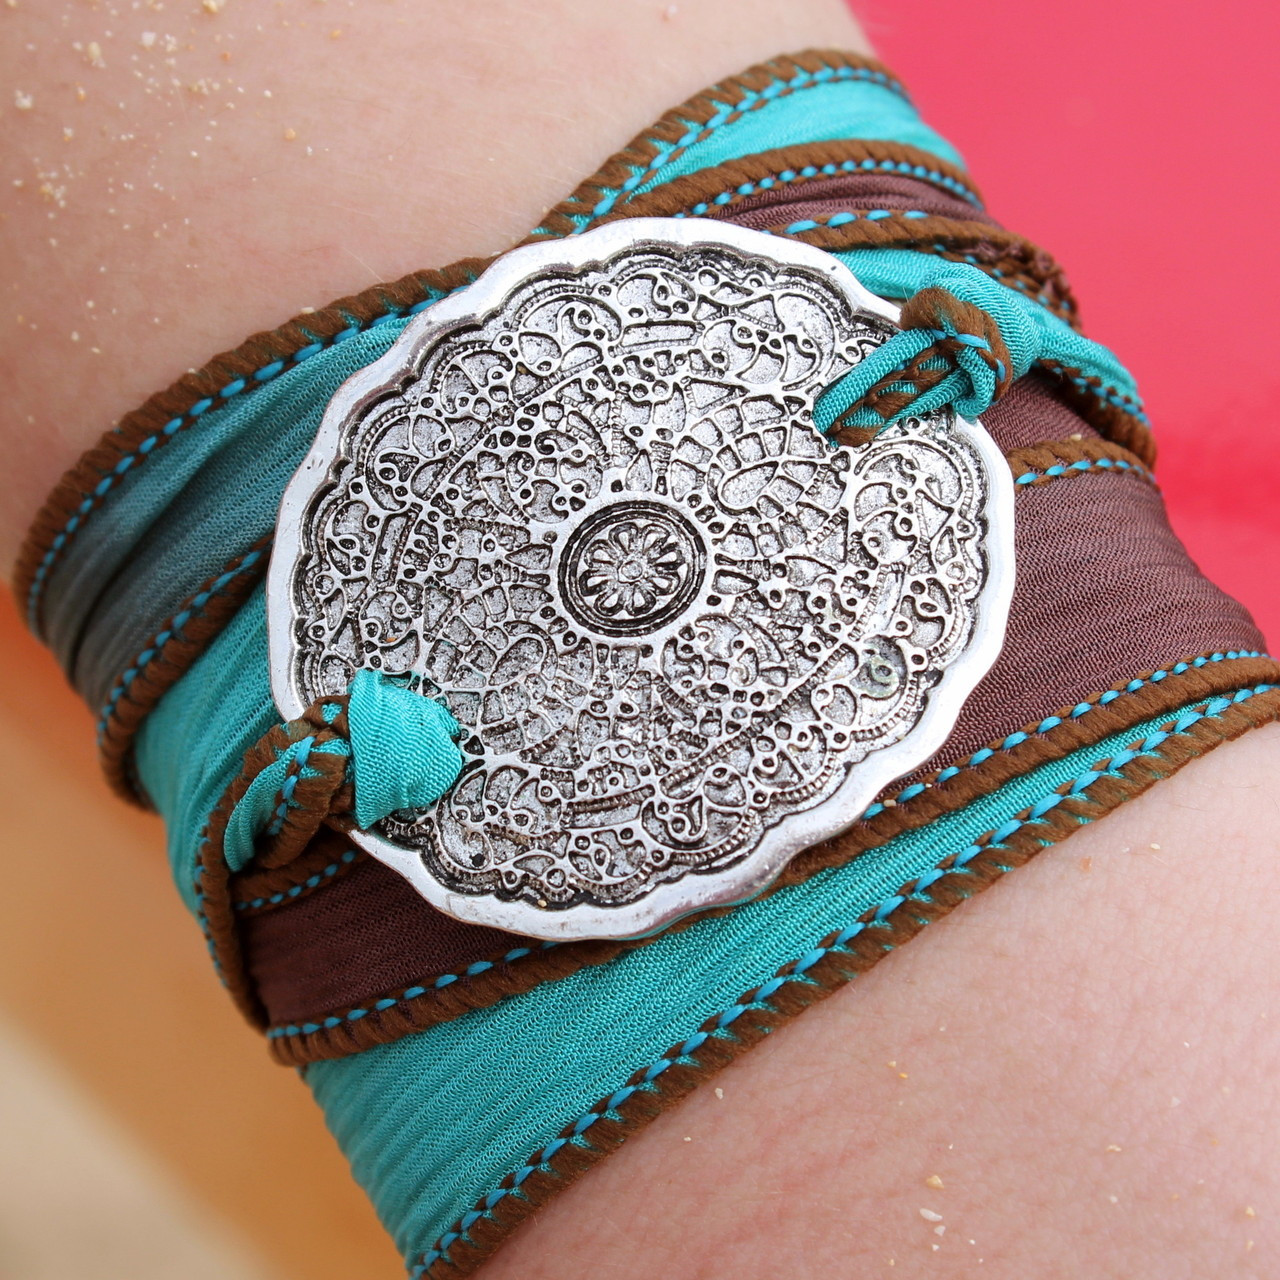 Bracelet type henna - Ummi's mehndi